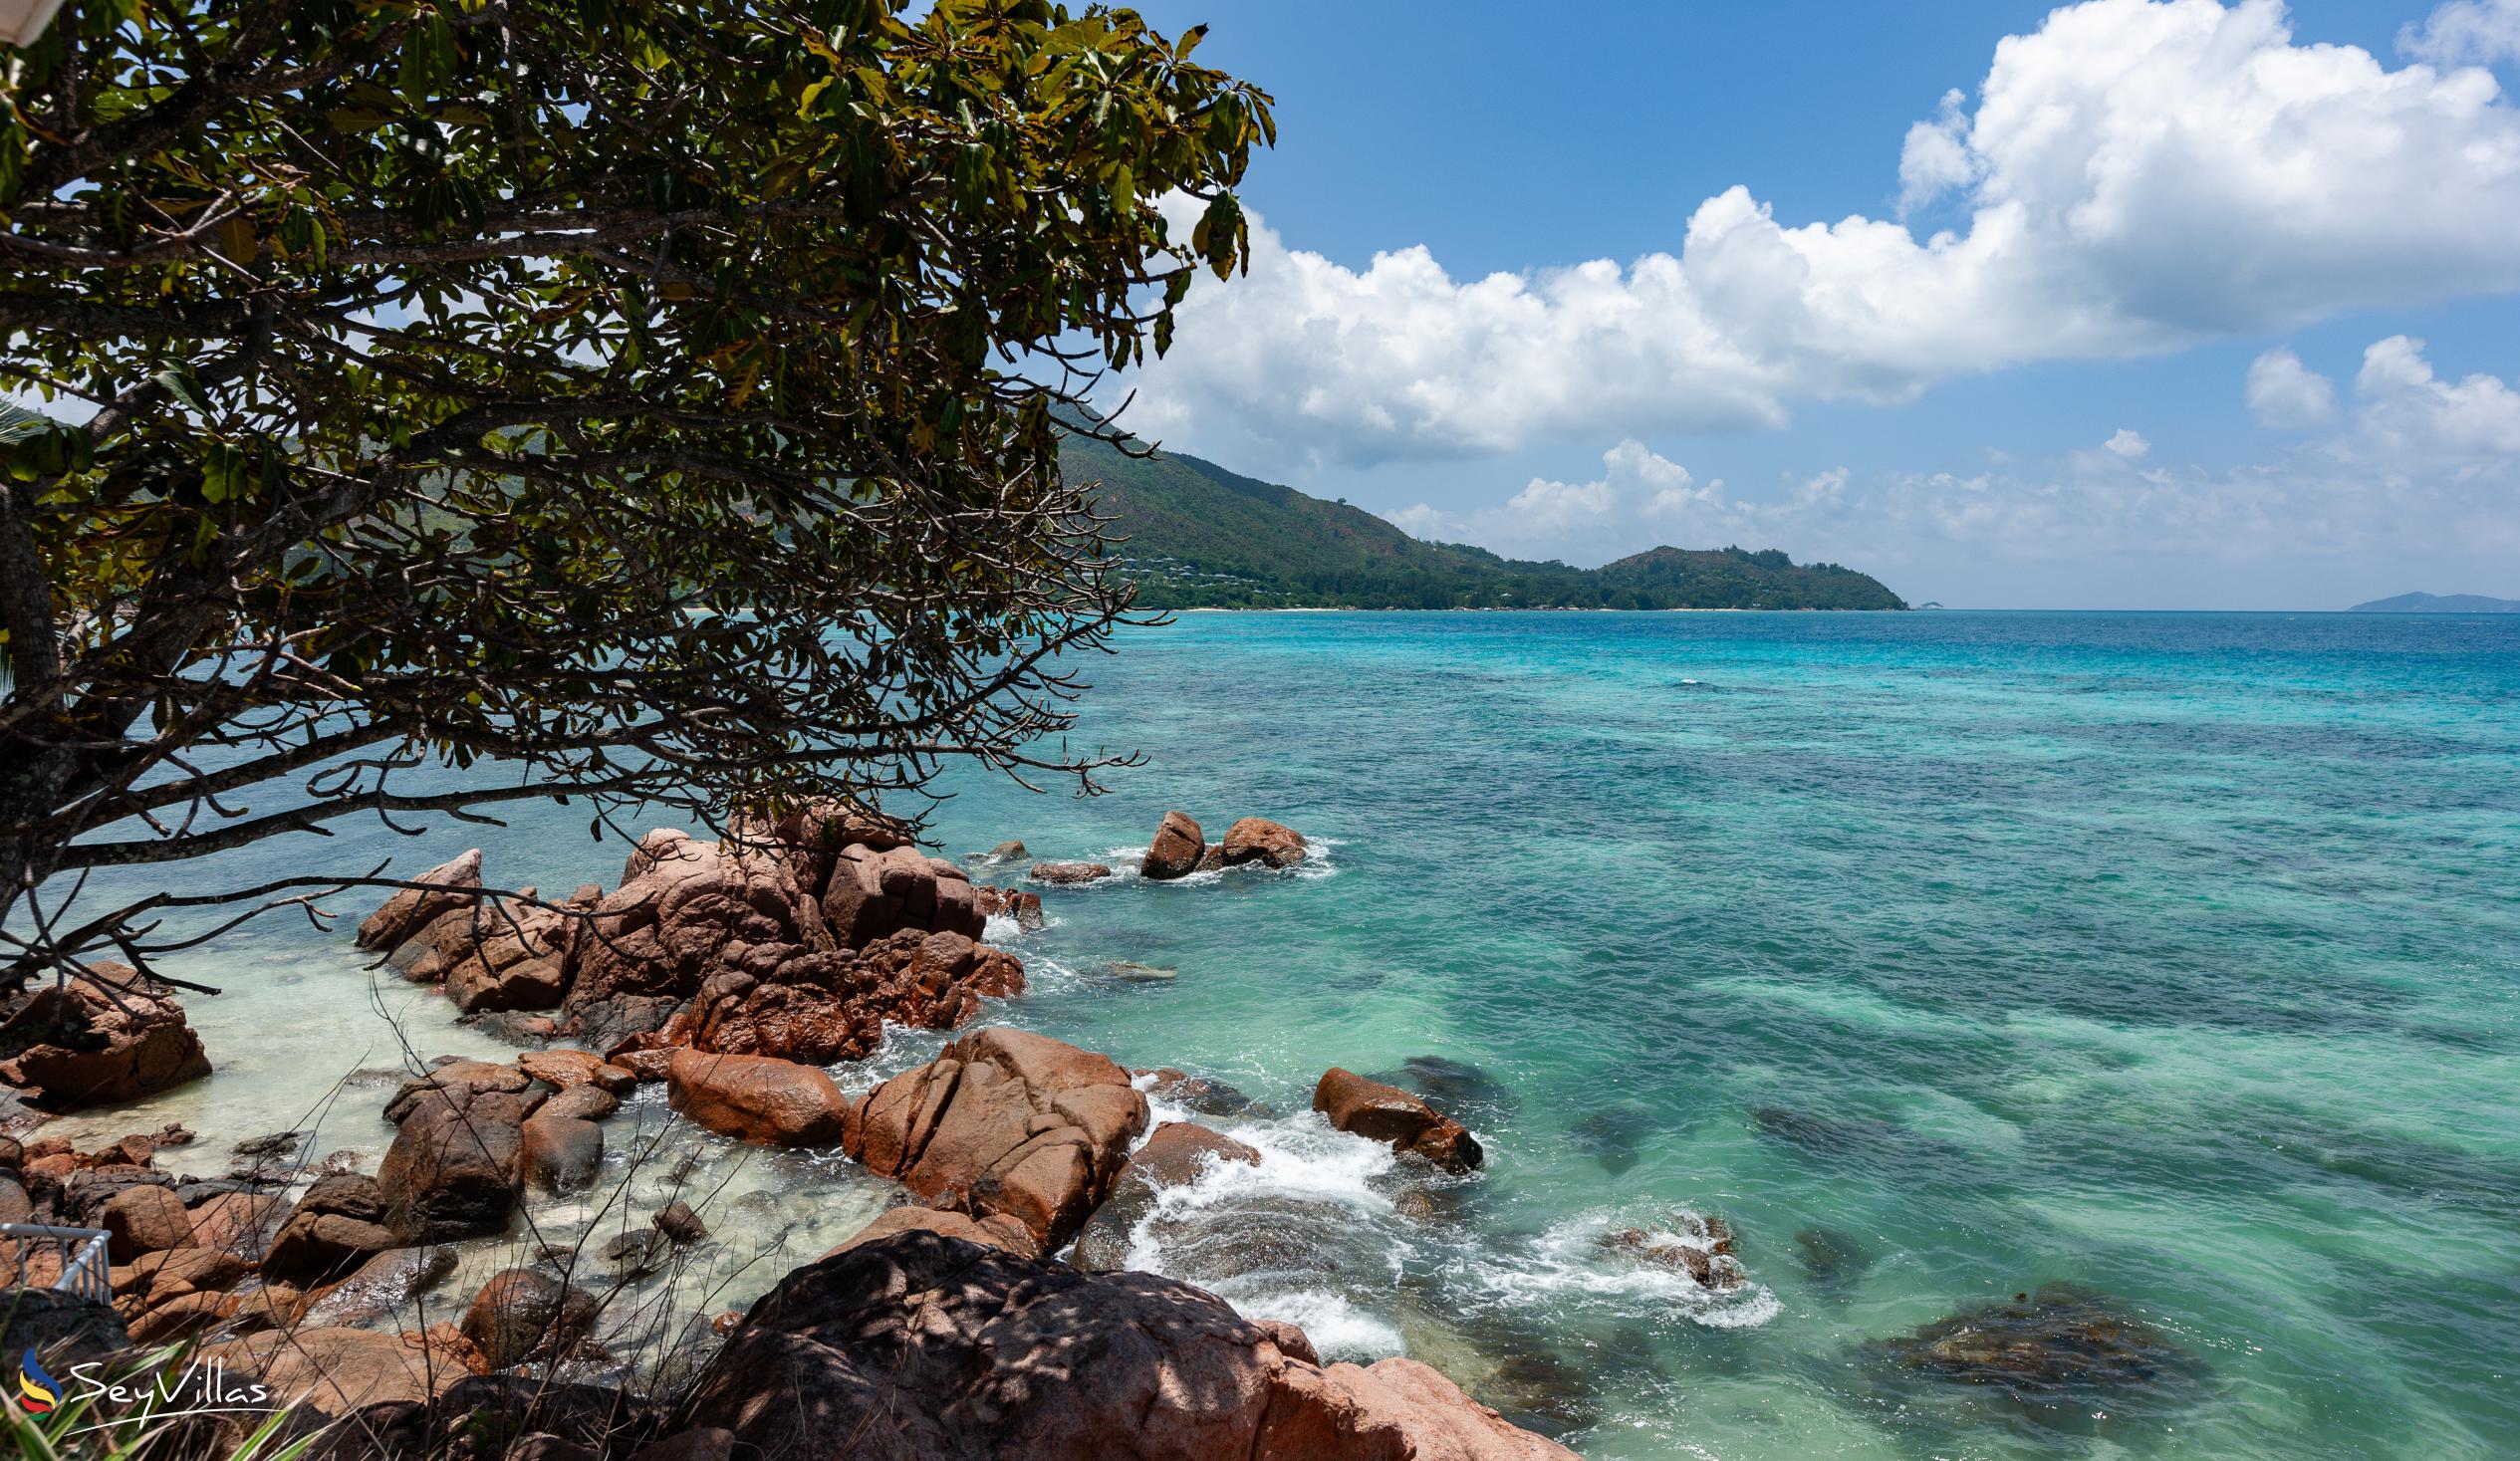 Photo 22: Coin D'Or - Location - Praslin (Seychelles)